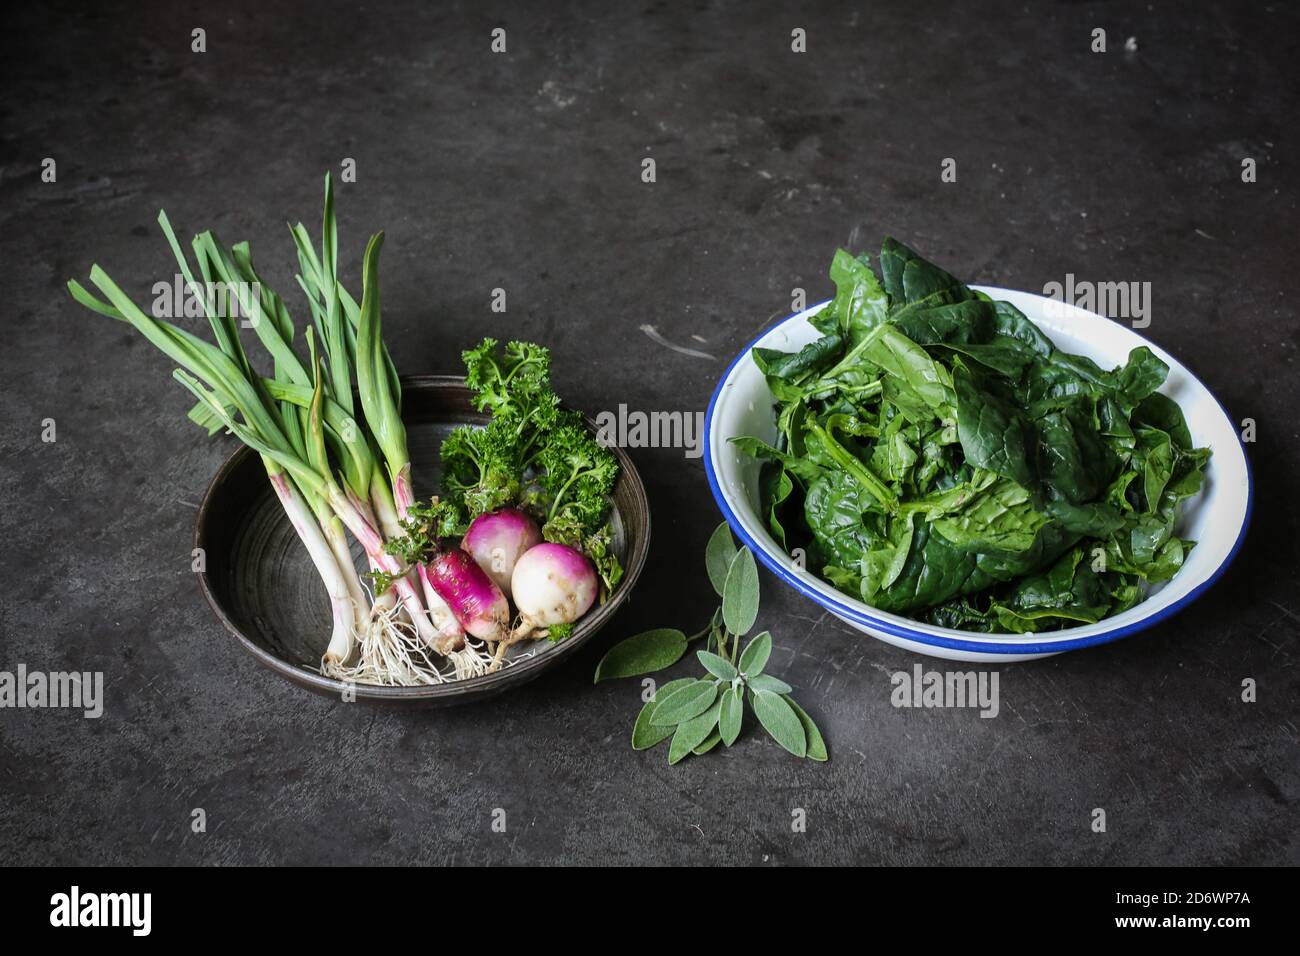 Garlic, turnips, spinach, sage and parsley. Stock Photo